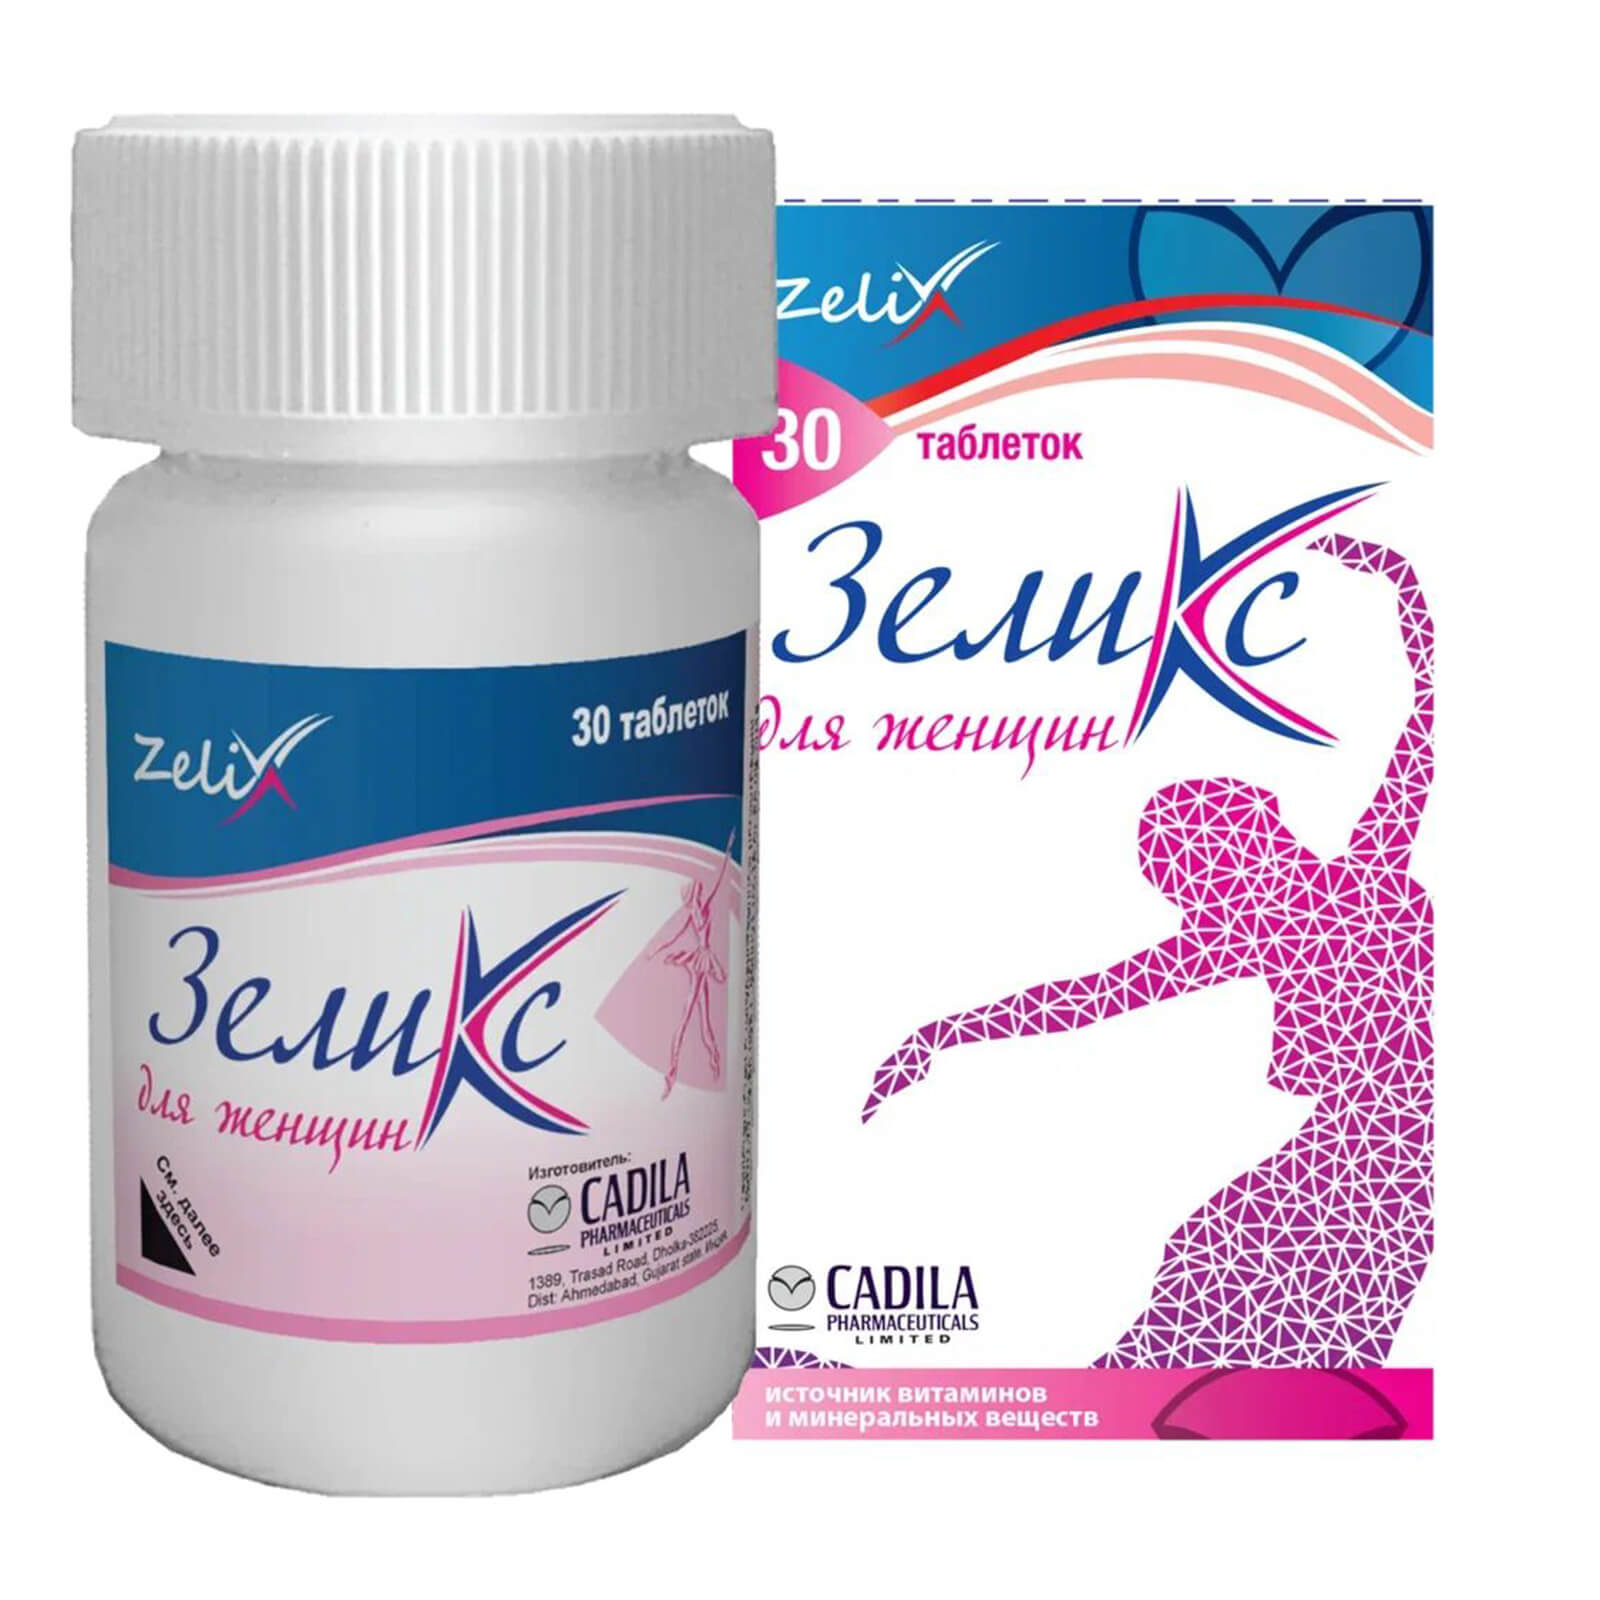 Зеликс для женщин, 30 таблеток, Cadila Pharmaceuticals Limited